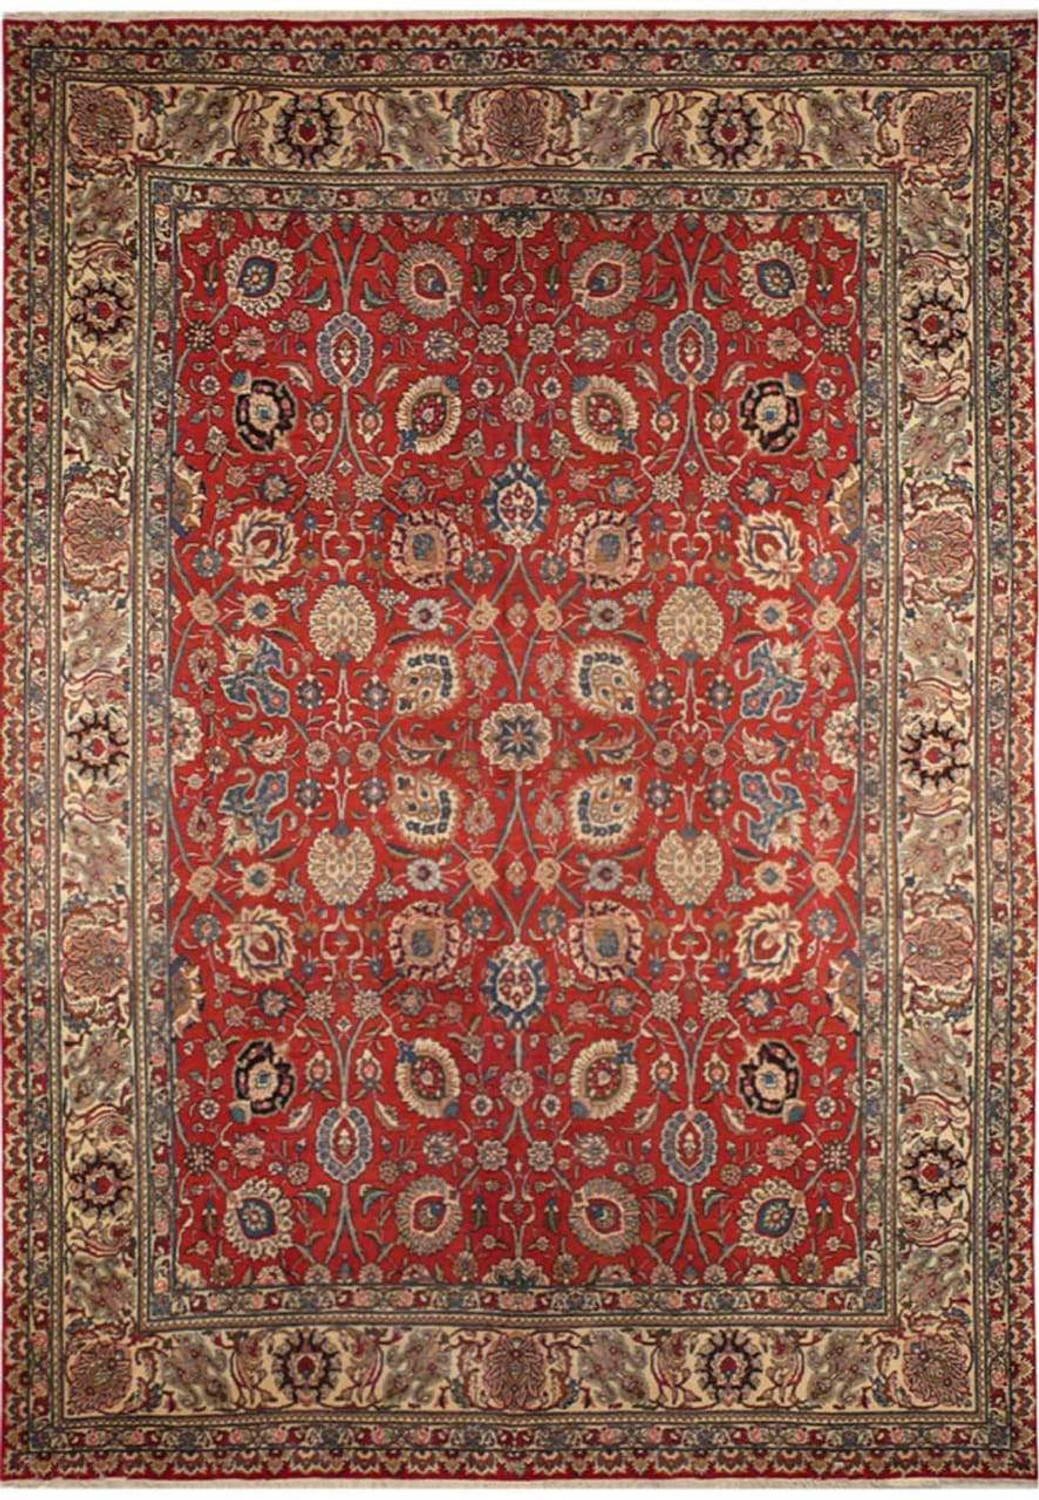 10 x 13 Persian Tabriz All-Over Design Rug